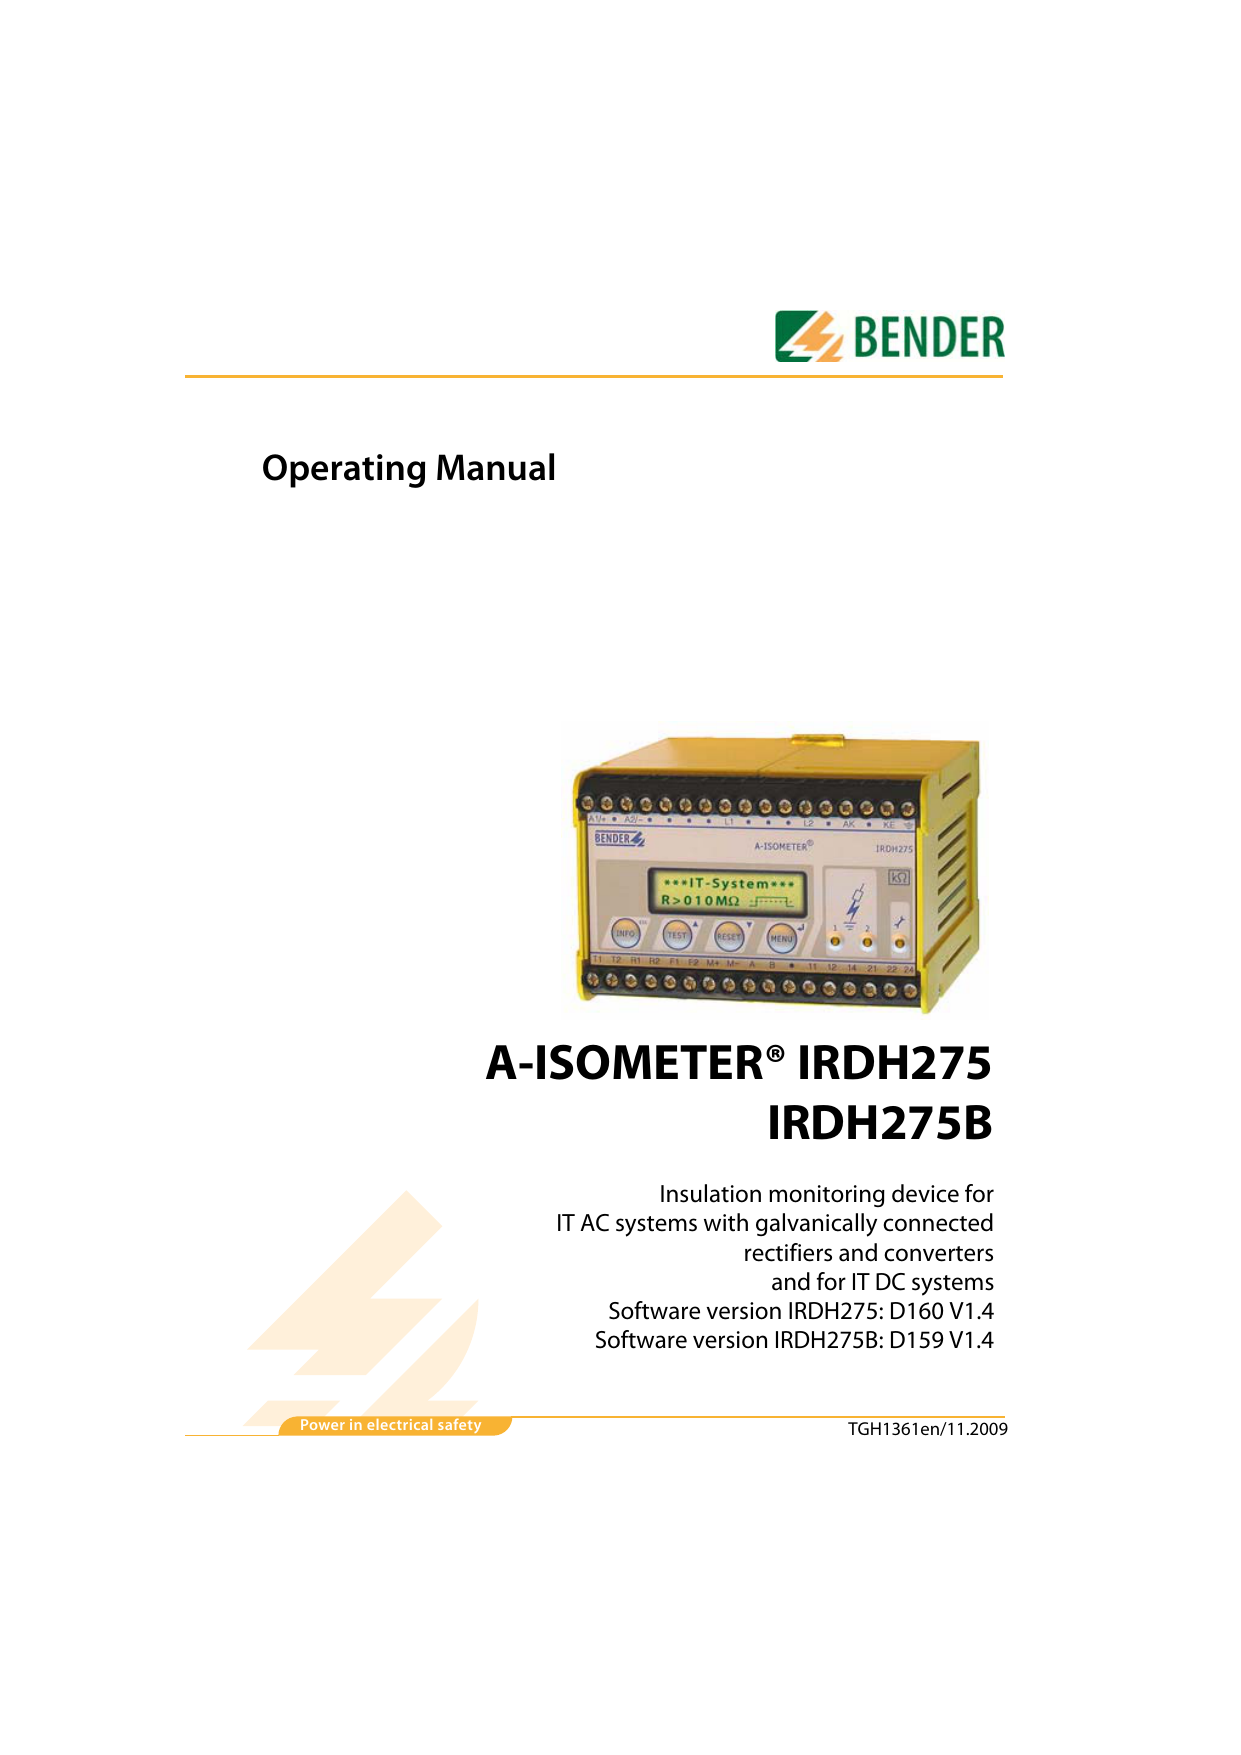 A-Isometer IRDH275/IRDH275B Bender 